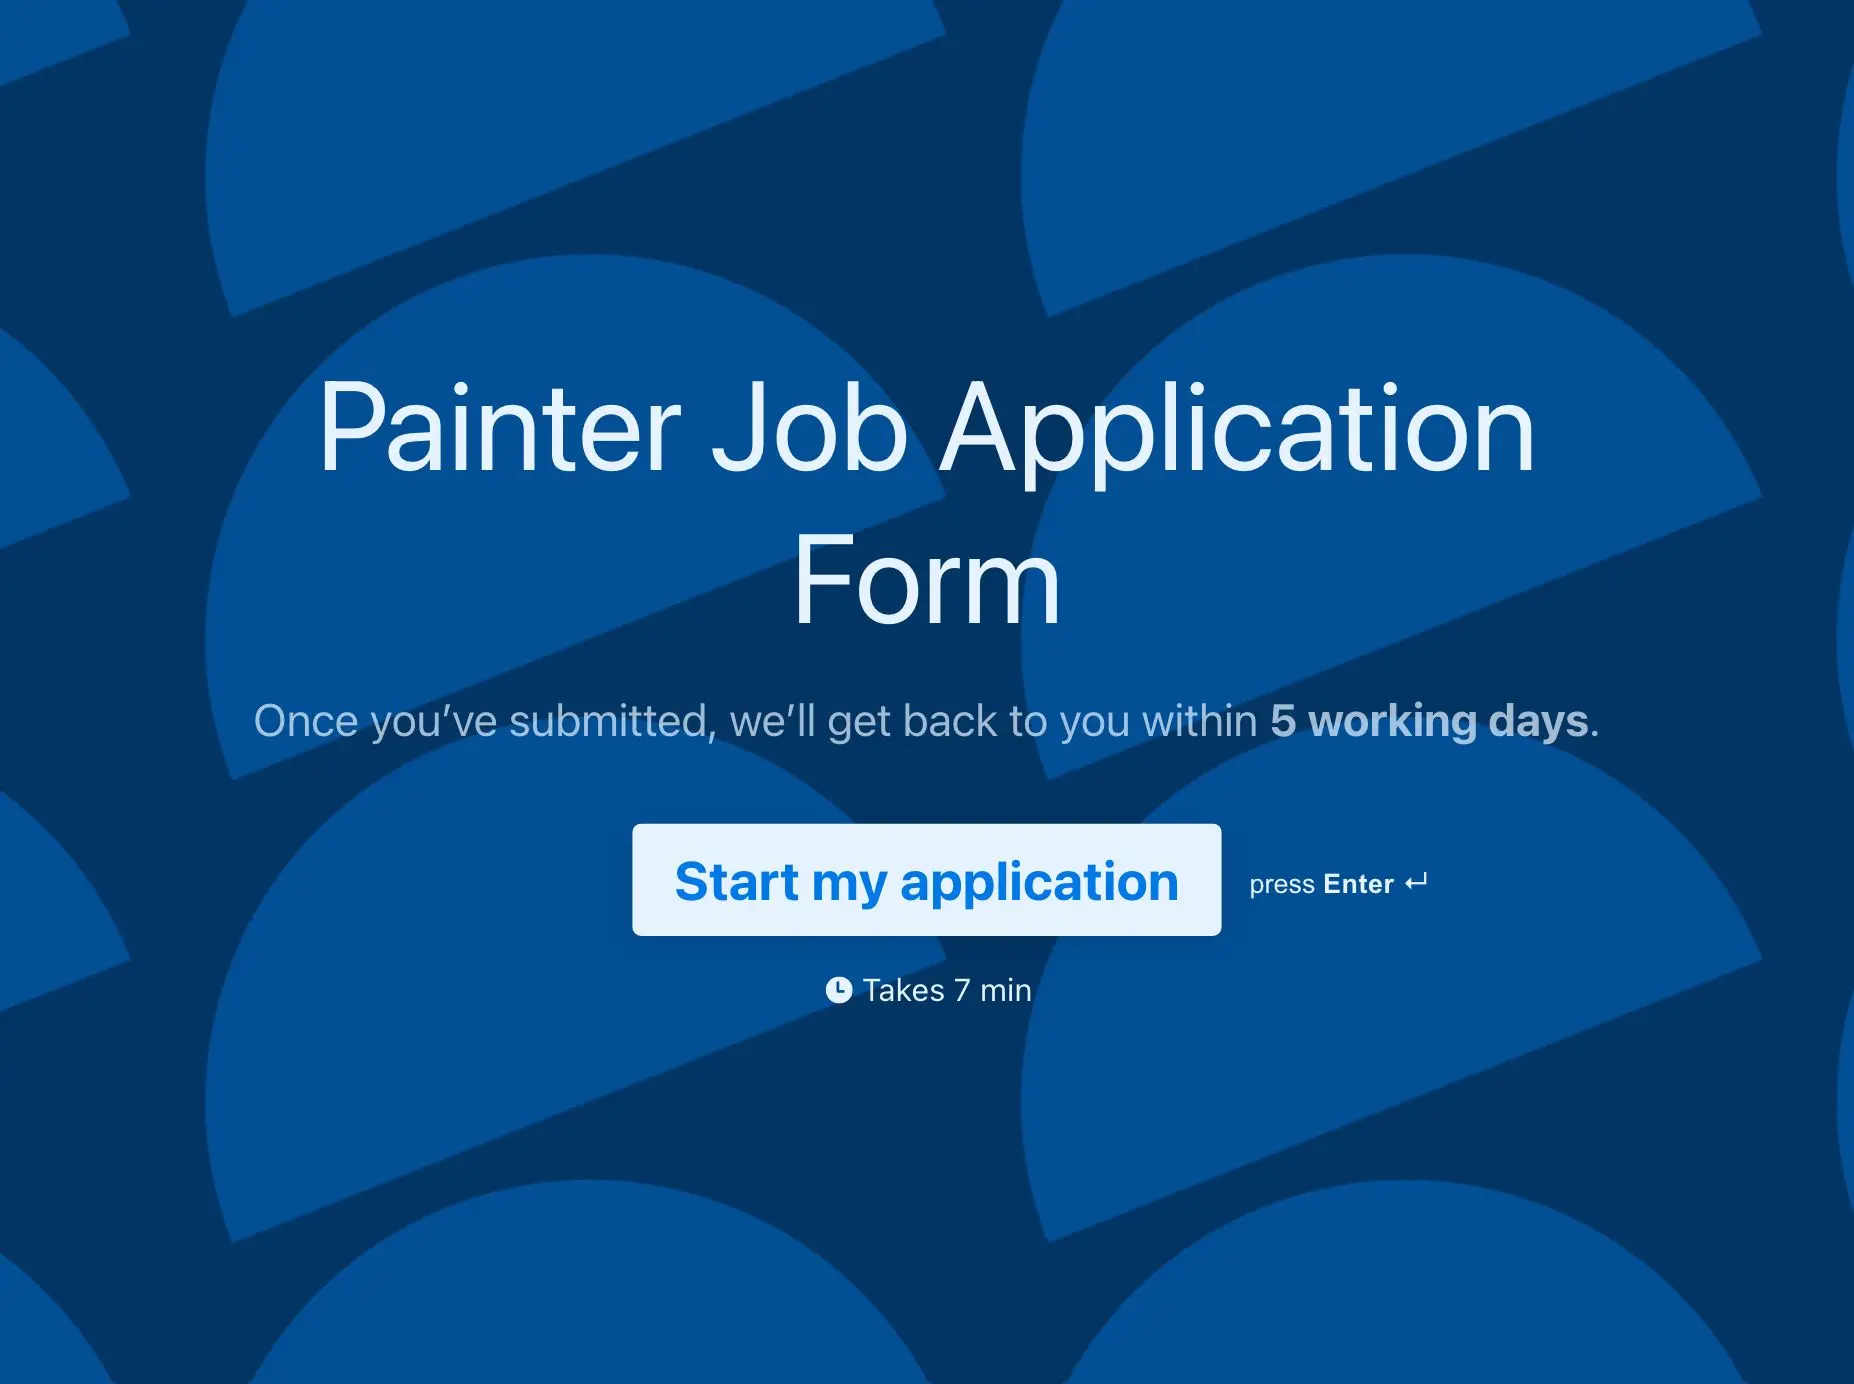 Painter Job Application Form Template Hero